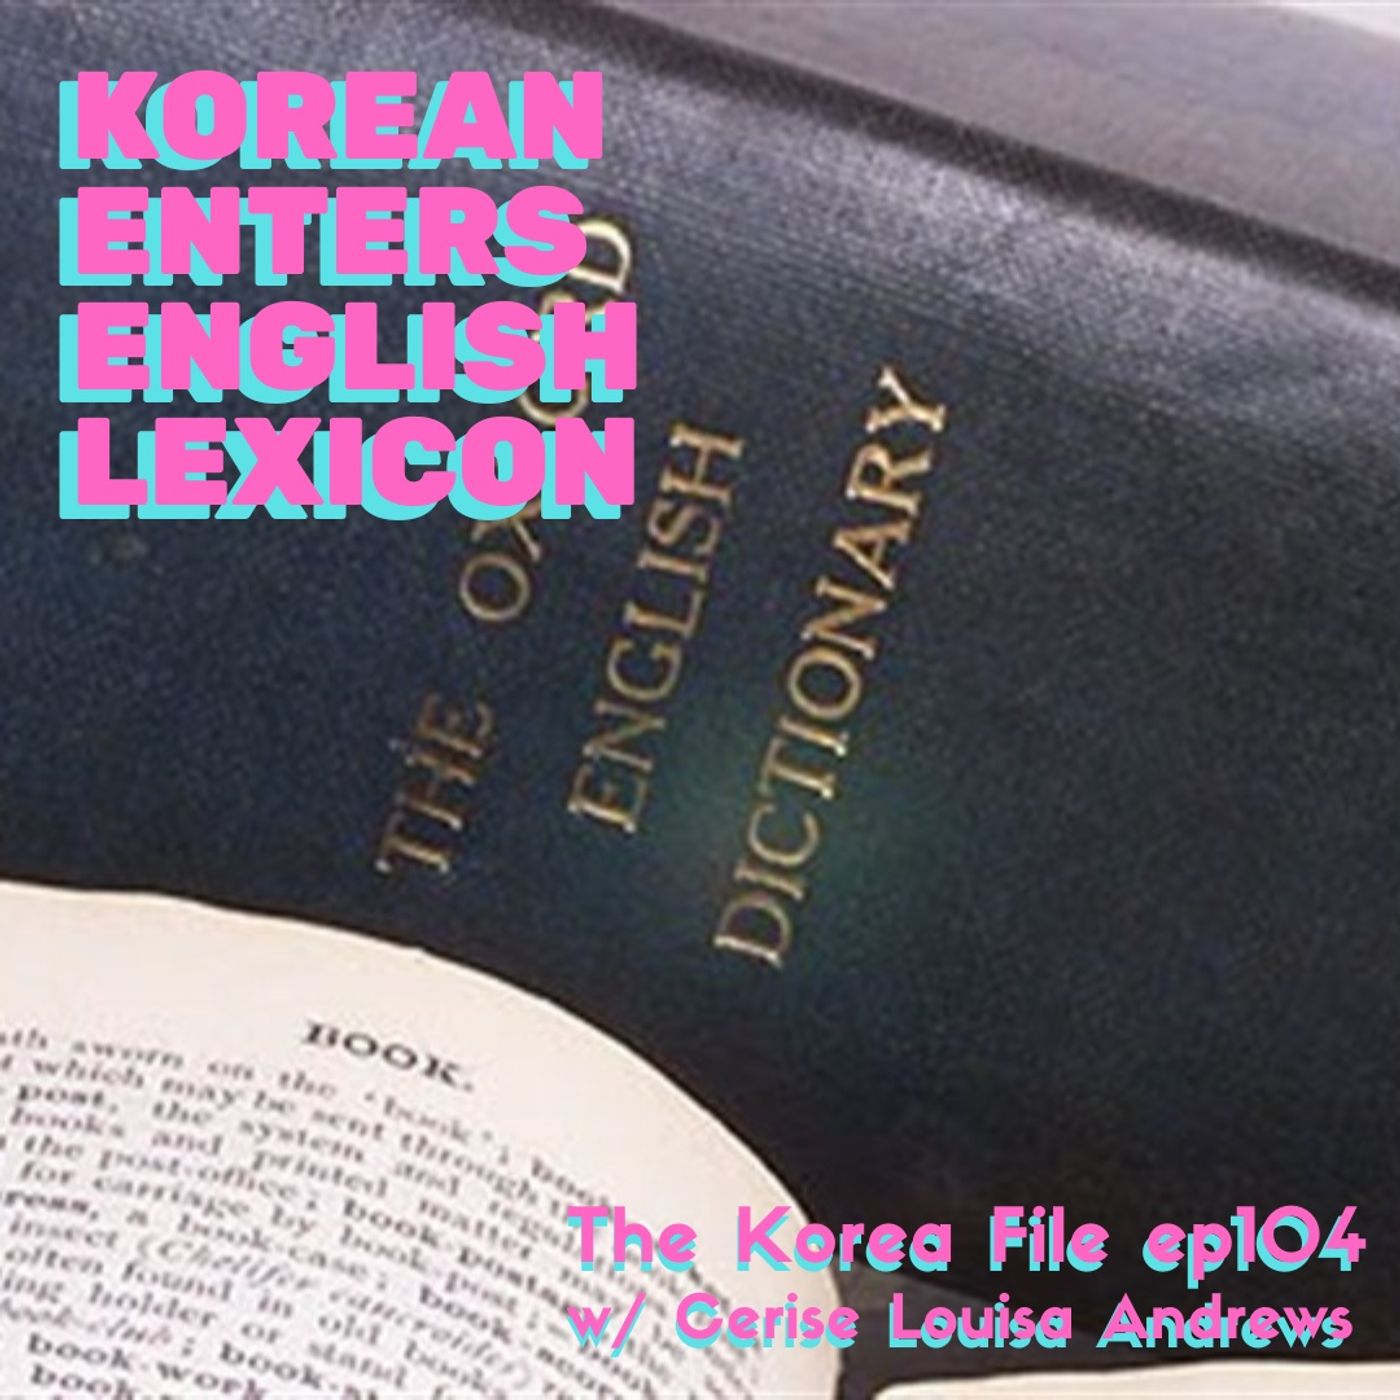 K-Words Enter the English Language Lexicon